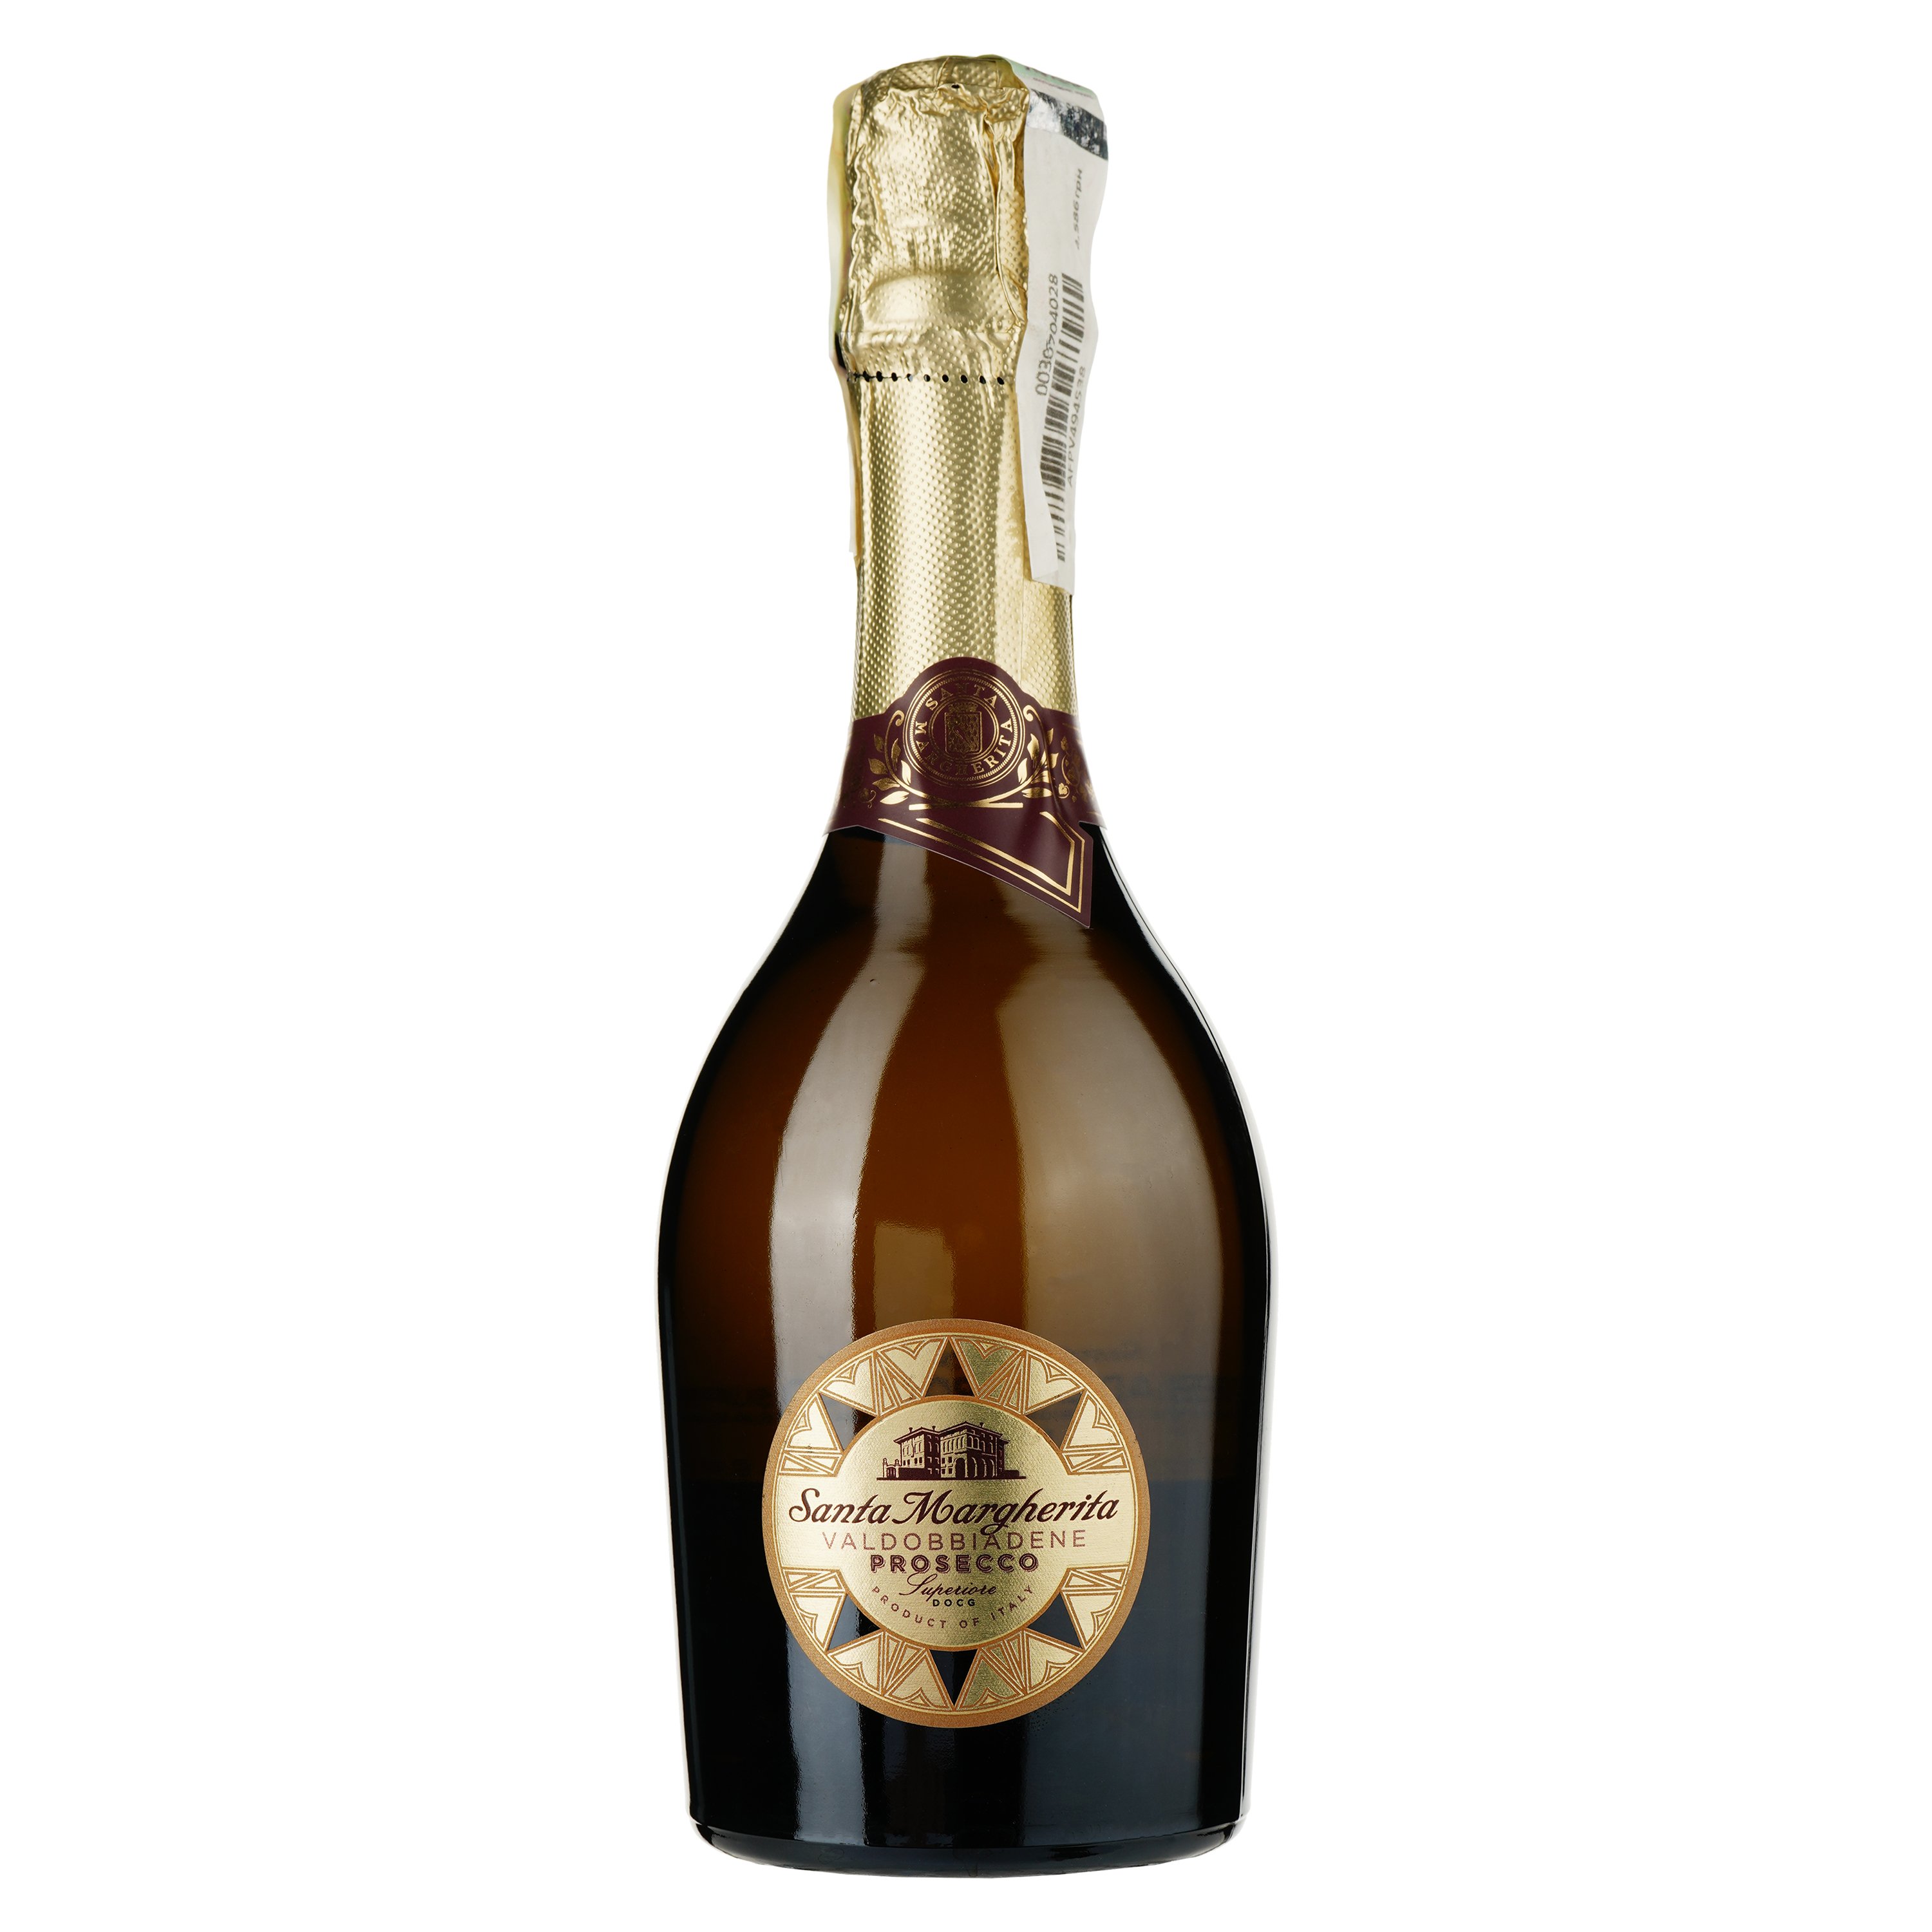 Игристое вино Santa Margherita Valdobbiadene Prosecco Superiore DOCG, белое, брют, 11,5%, 0,375 л - фото 1